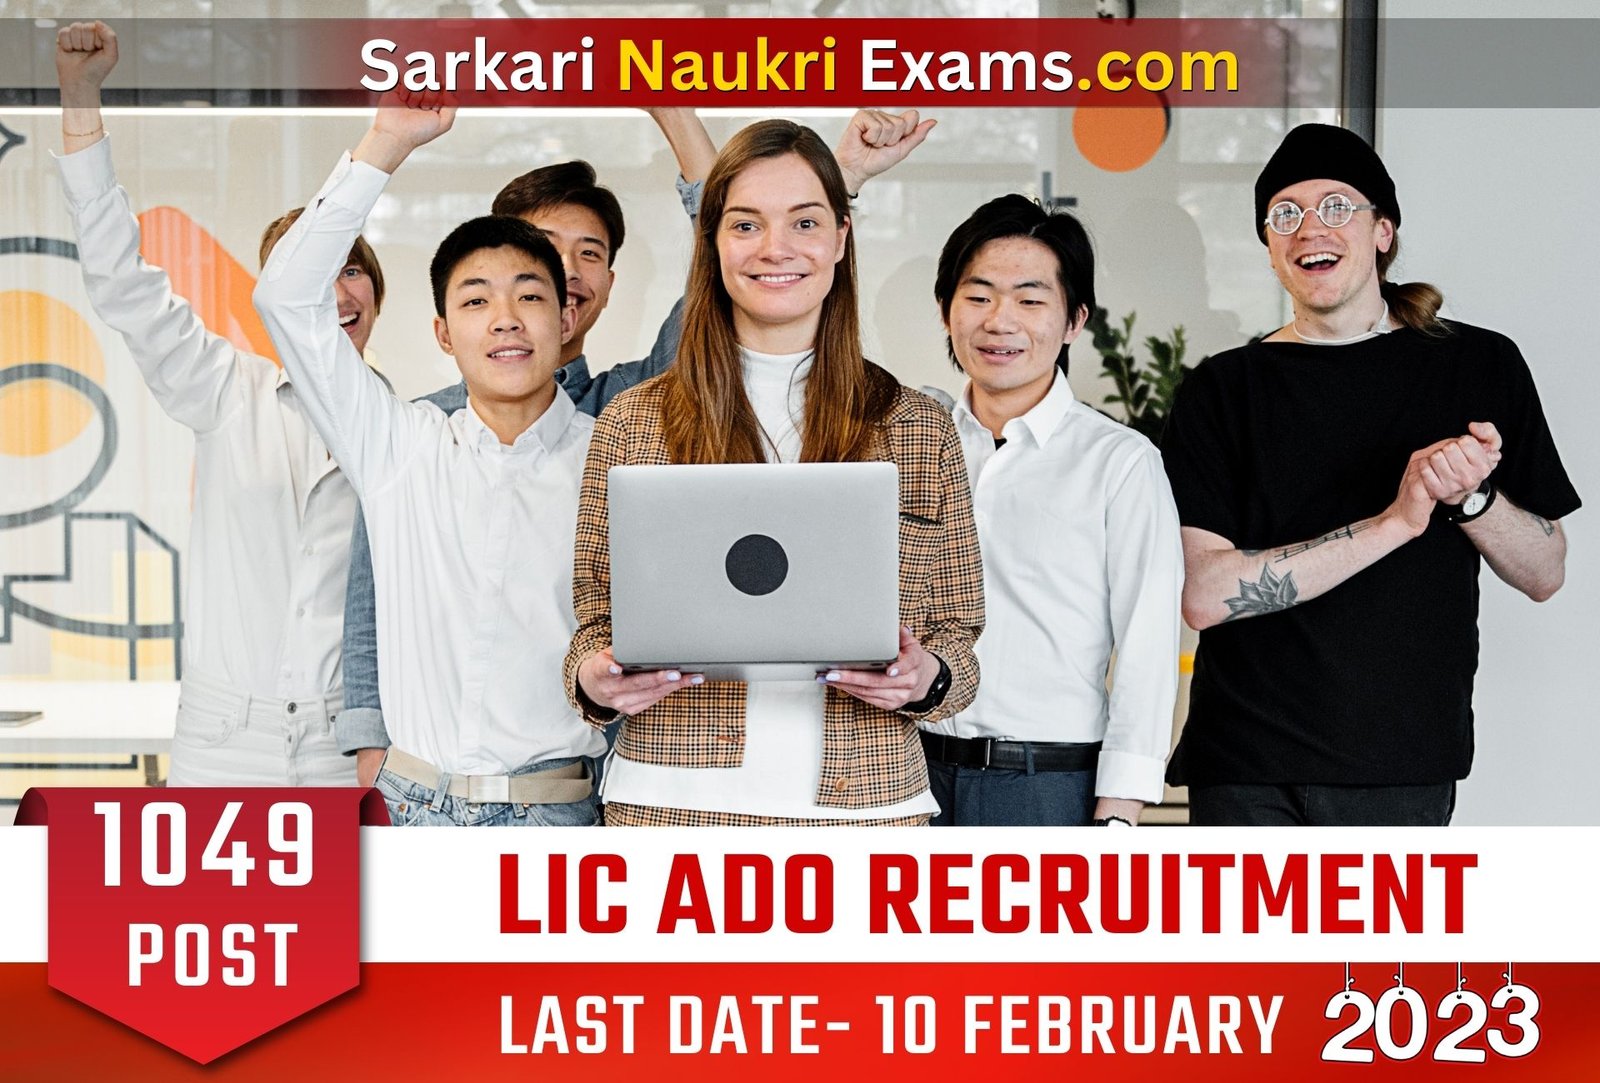  LIC Apprentice Development Officer Recruitment Form 2023 | Last Date 10 February